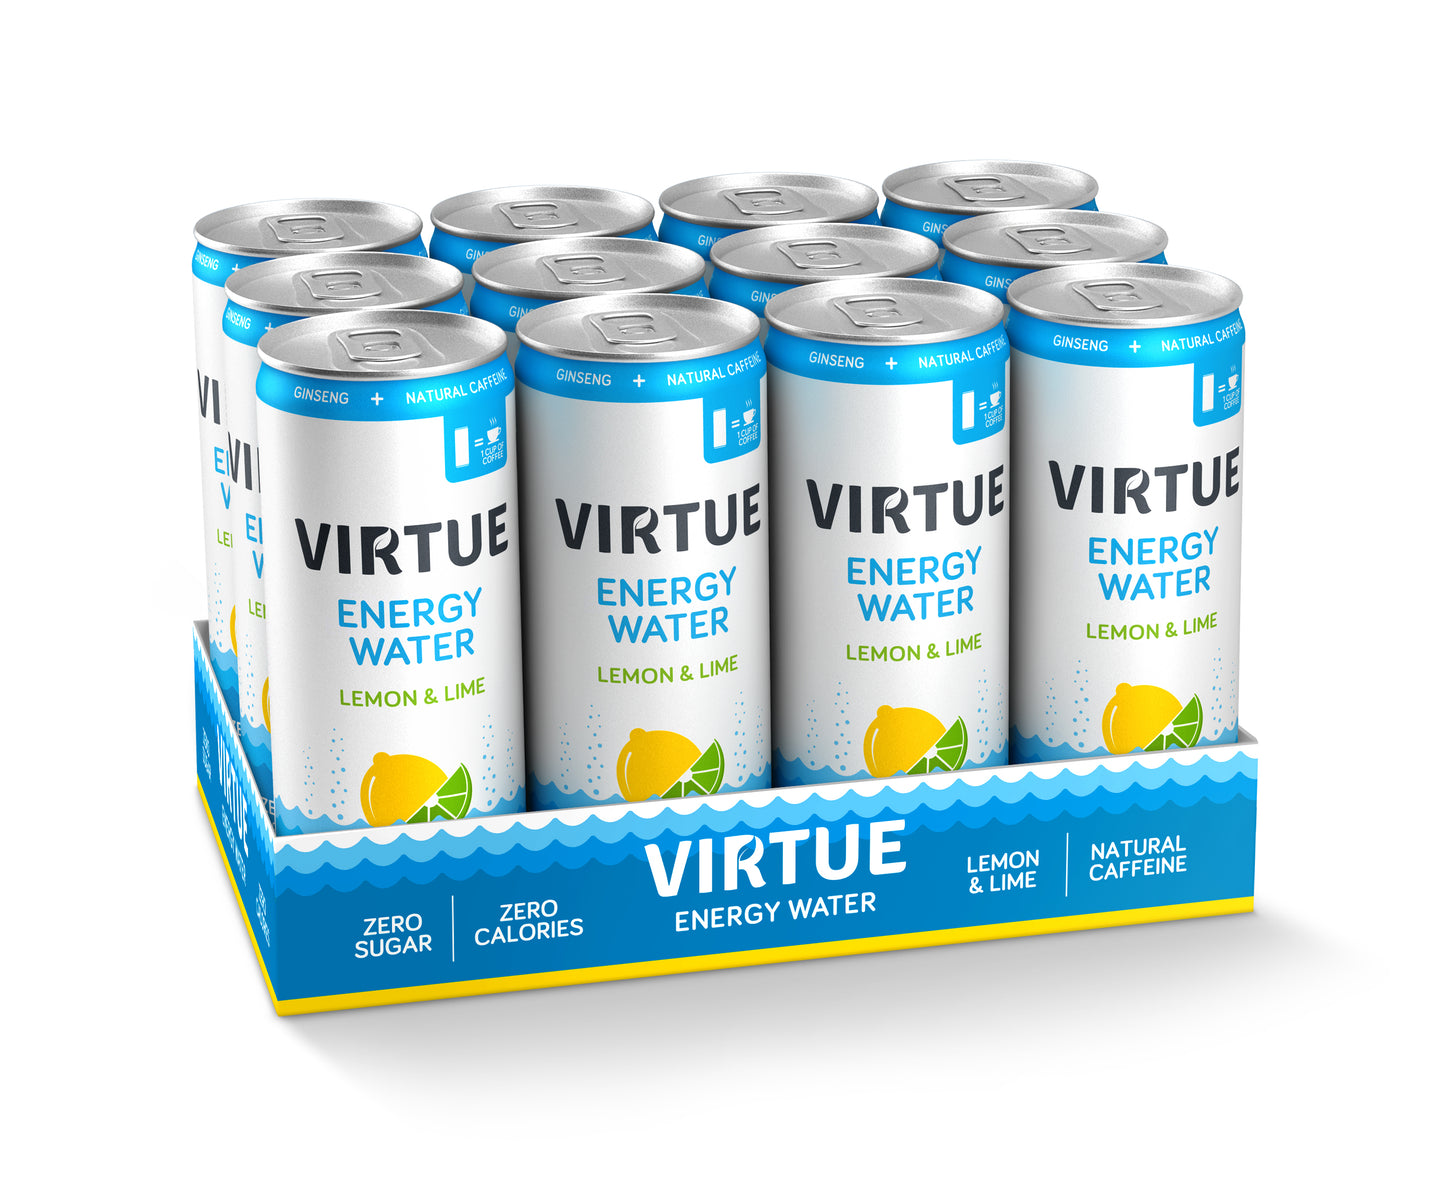 Virtue Energy Water Lemon & Lime